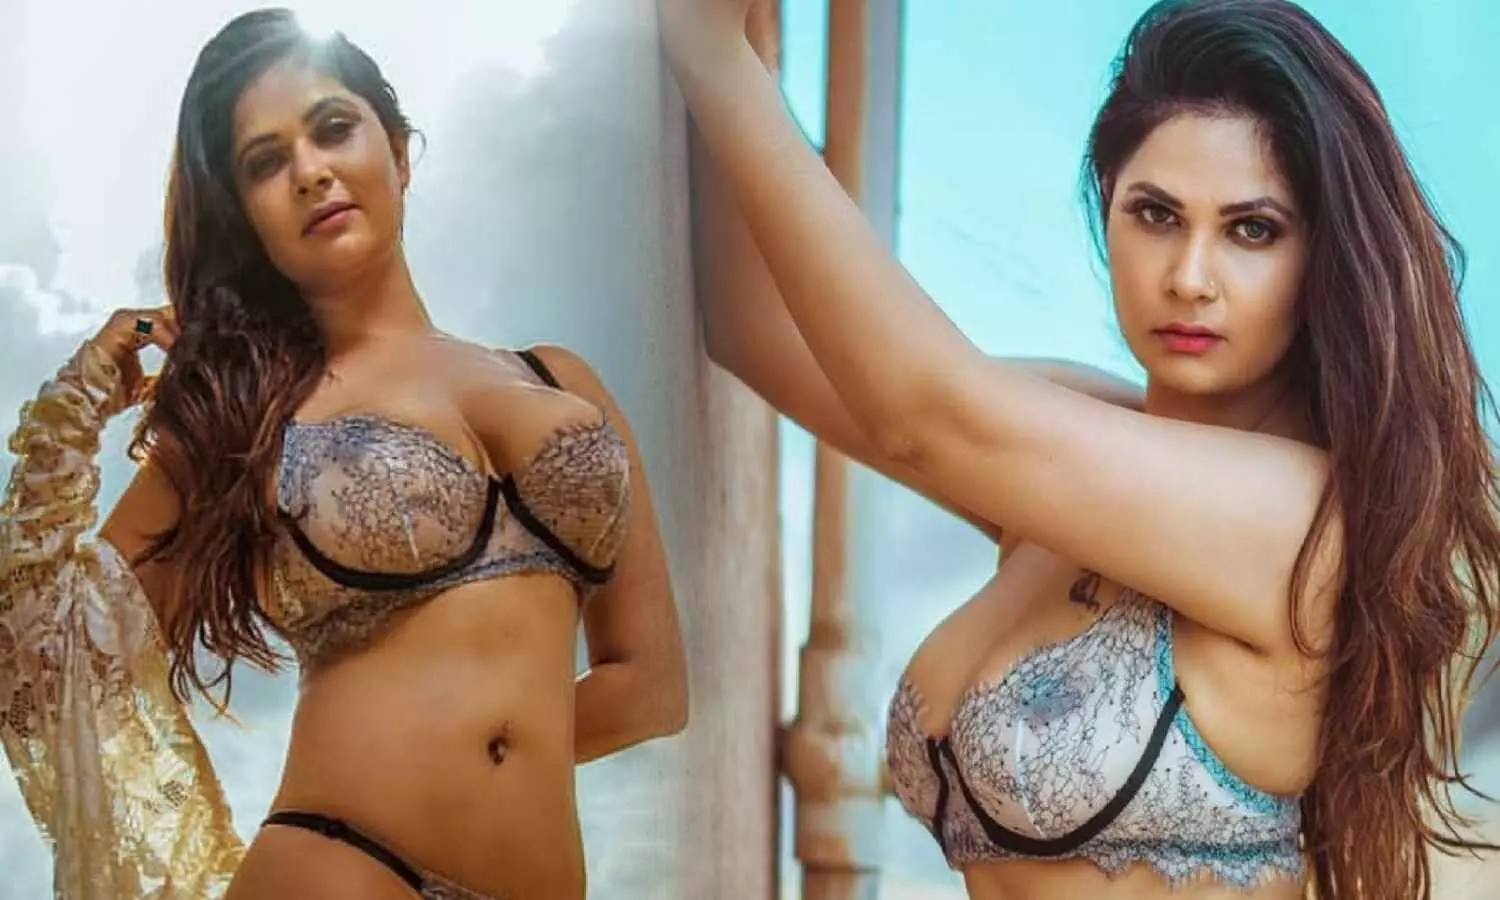 Aabha Paul Porn - Gandi Baat Fame Actress Abha Paul Hot Photos Viral on Social Media Latest  News in Hindi Newstrack Samachar | Gandi Baat Actress: à¤—à¤‚à¤¦à¥€ à¤¬à¤¾à¤¤ à¤à¤•à¥à¤Ÿà¥à¤°à¥‡à¤¸  à¤†à¤­à¤¾ à¤ªà¥‰à¤² à¤•à¥€ à¤¸à¤¬à¤¸à¥‡ à¤¹à¥‰à¤Ÿ à¤¤à¤¸à¥à¤µà¥€à¤°à¥‡à¤‚, 